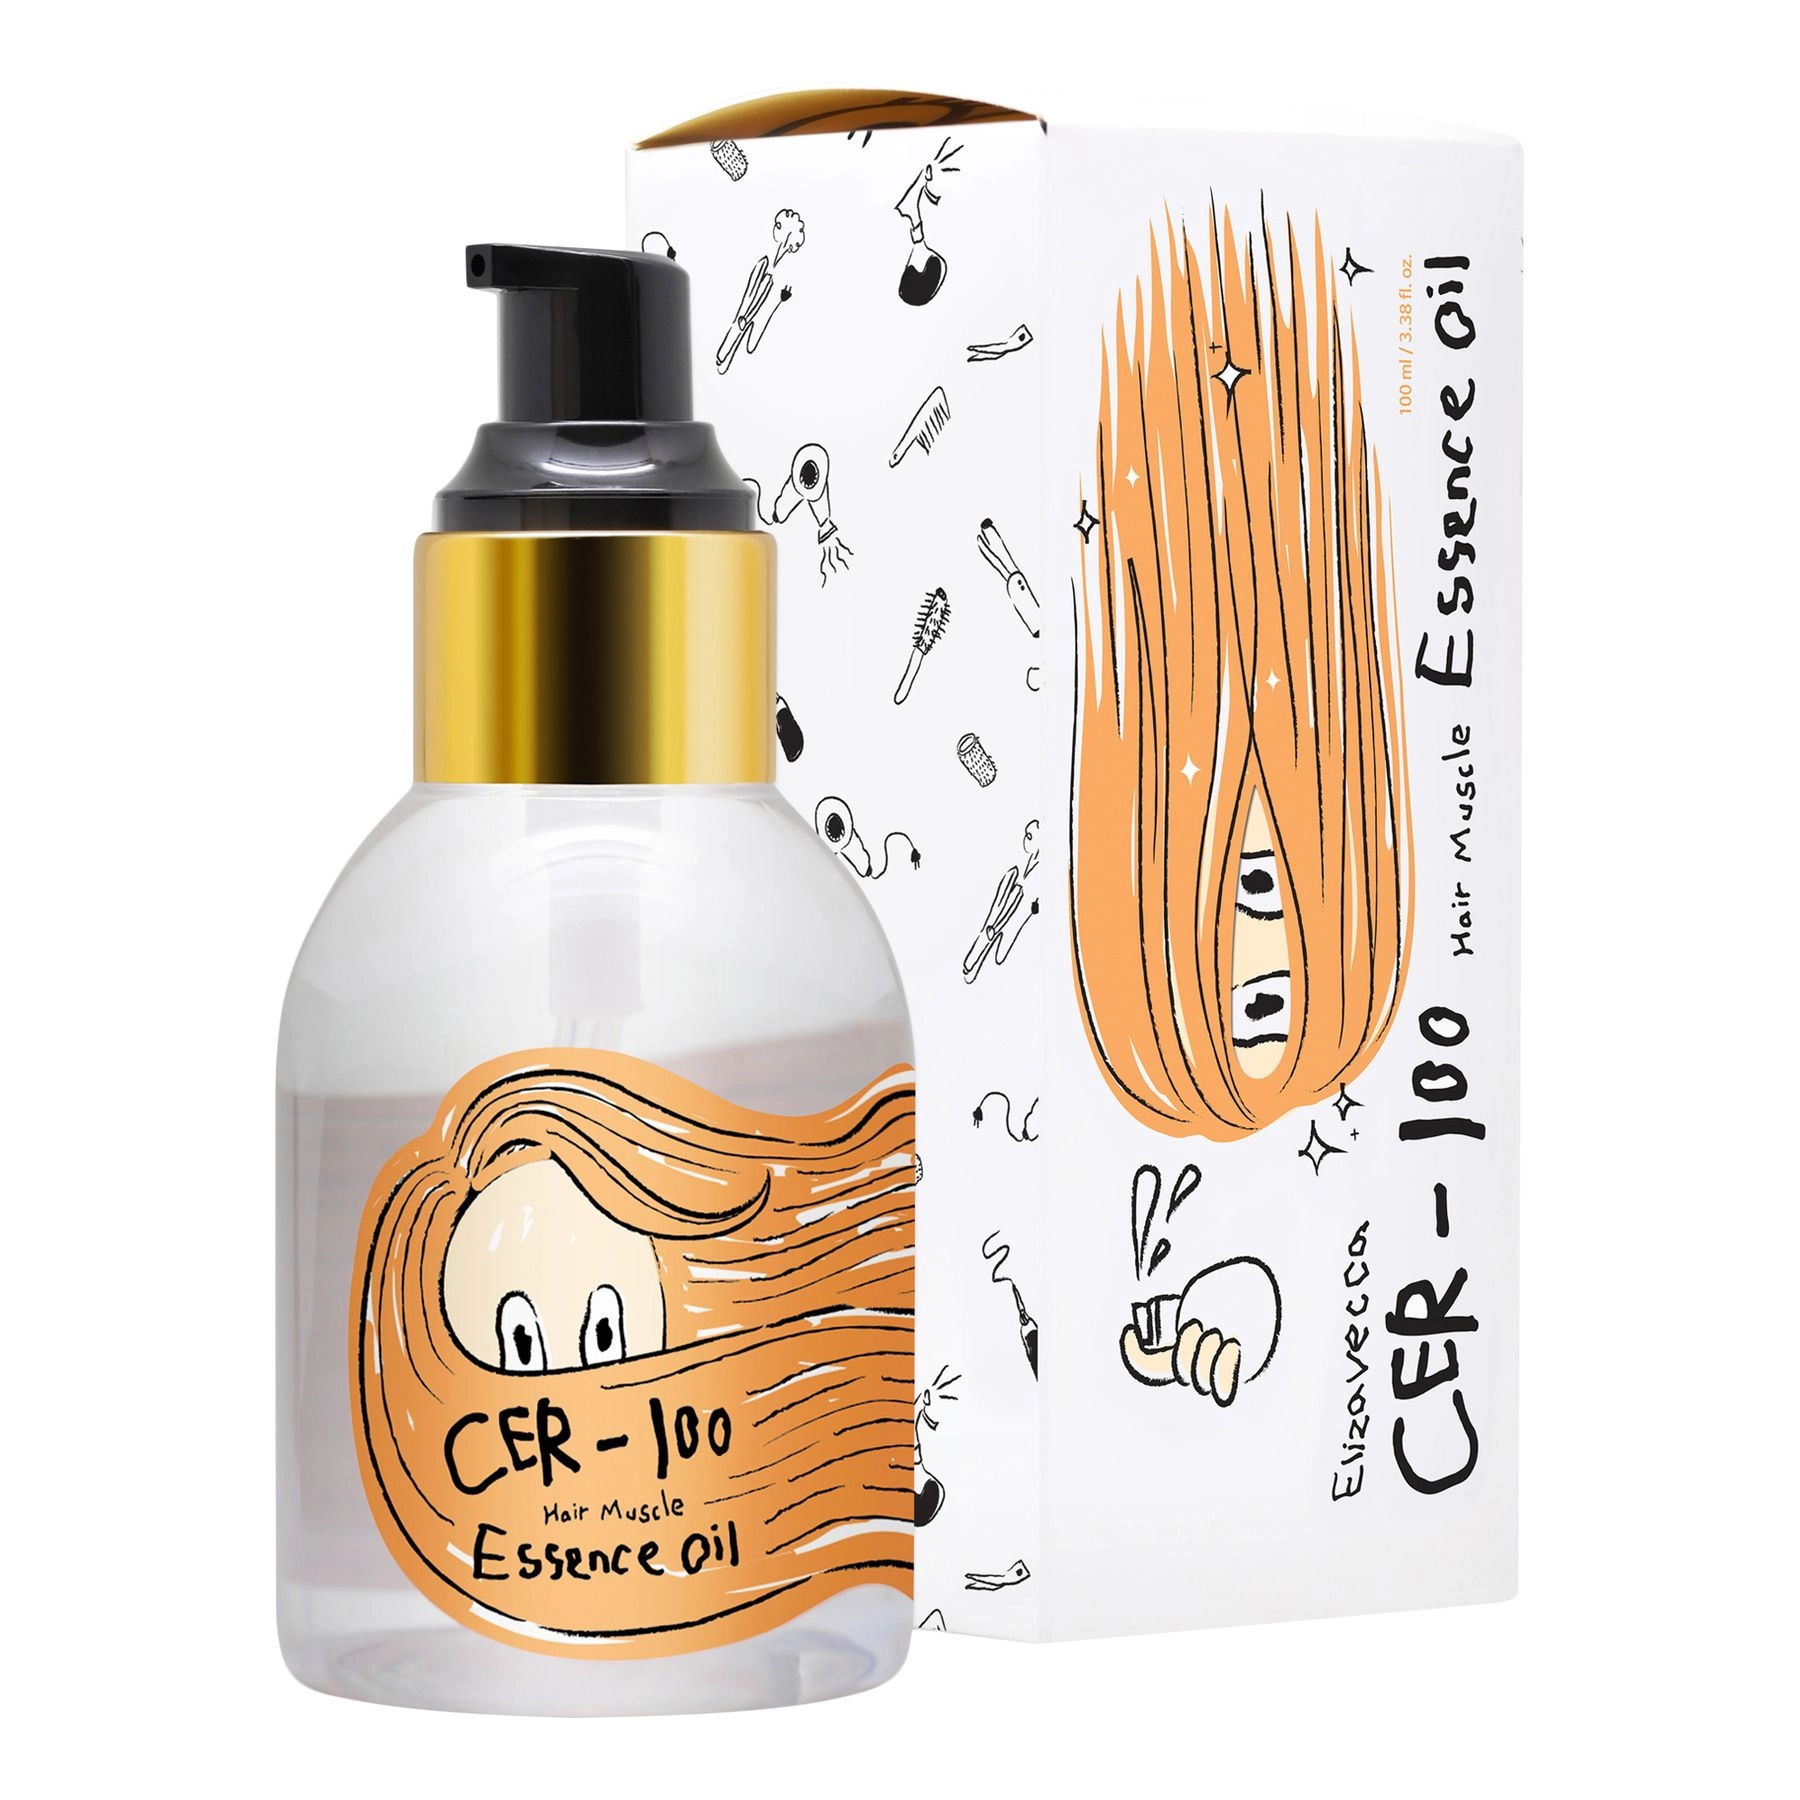 Есенція на основі масел для зміцнення волосся - Elizavecca CER-100 Hair Muscle Essence Oil, 100 мл - фото N1